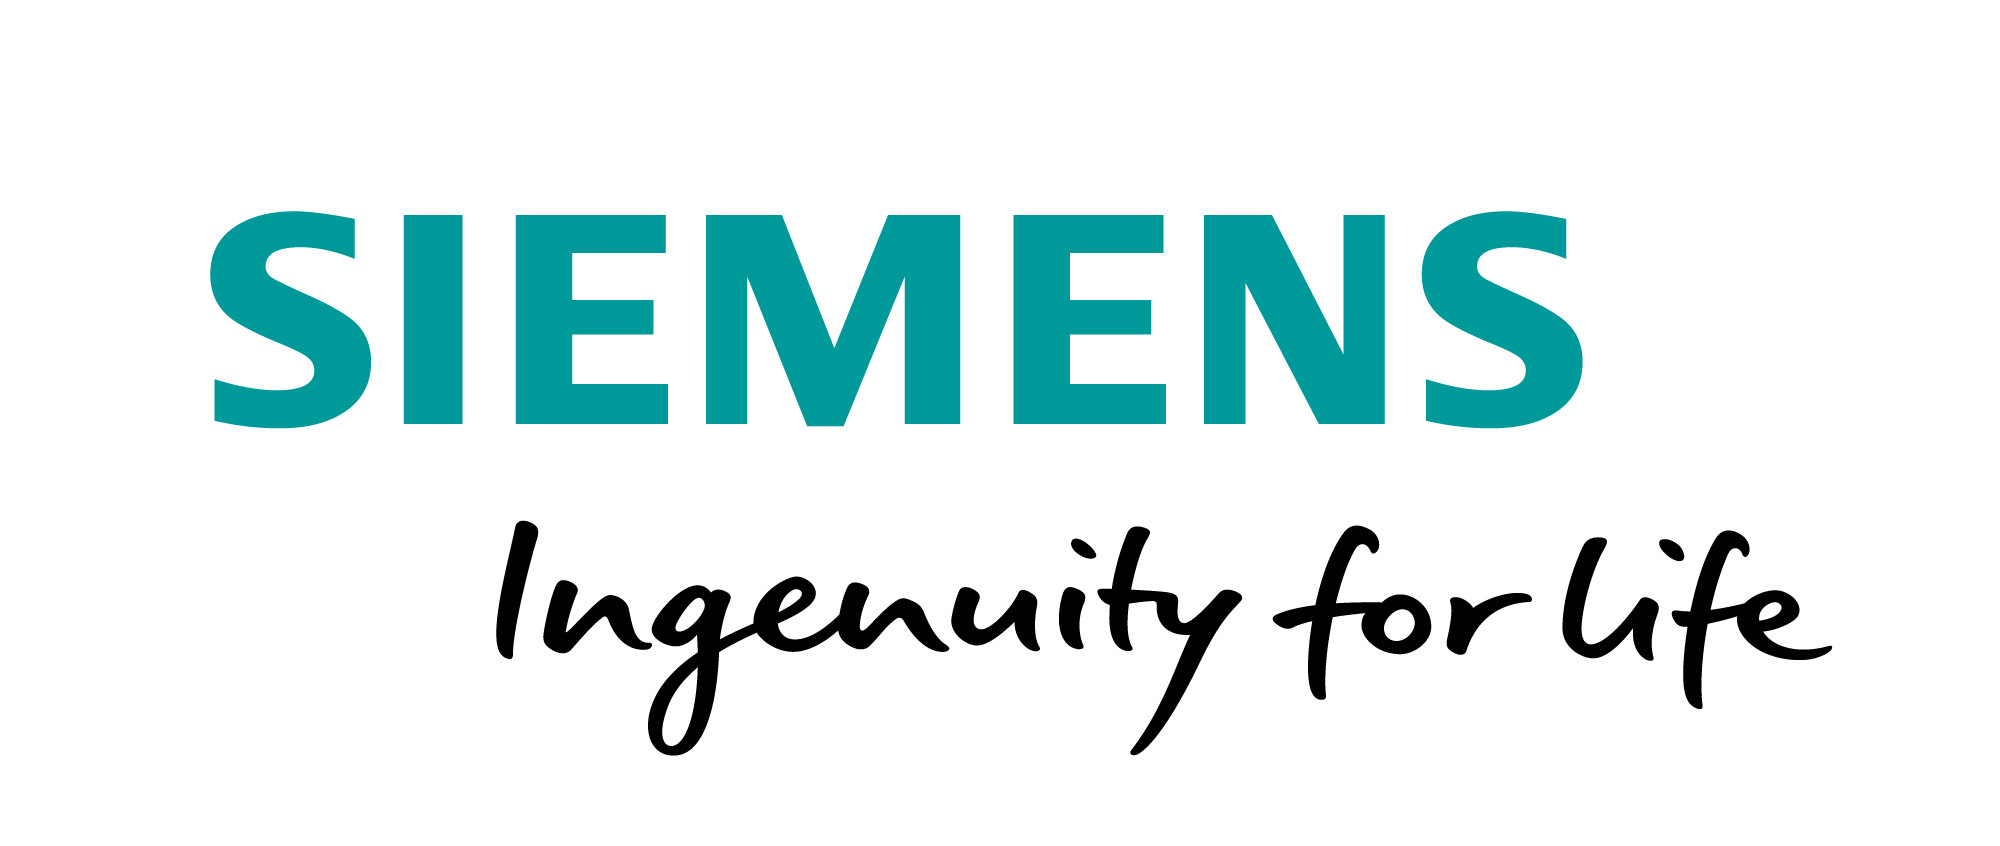 Academic Work - Servicetekniker inom automation till Siemens